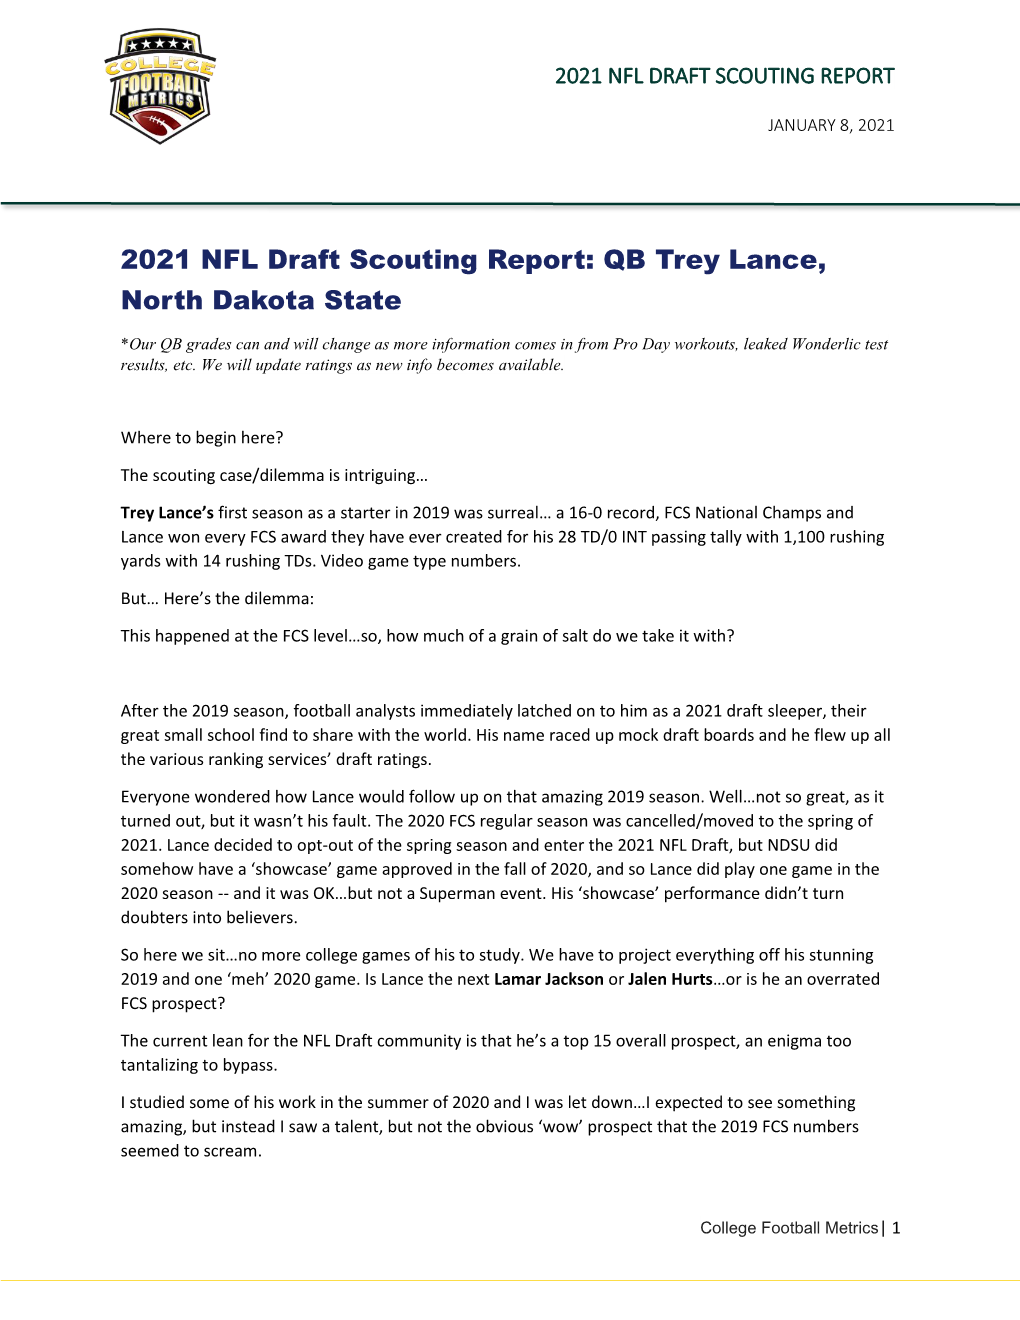 2021 NFL Draft Scouting Report: QB Trey Lance, North Dakota State